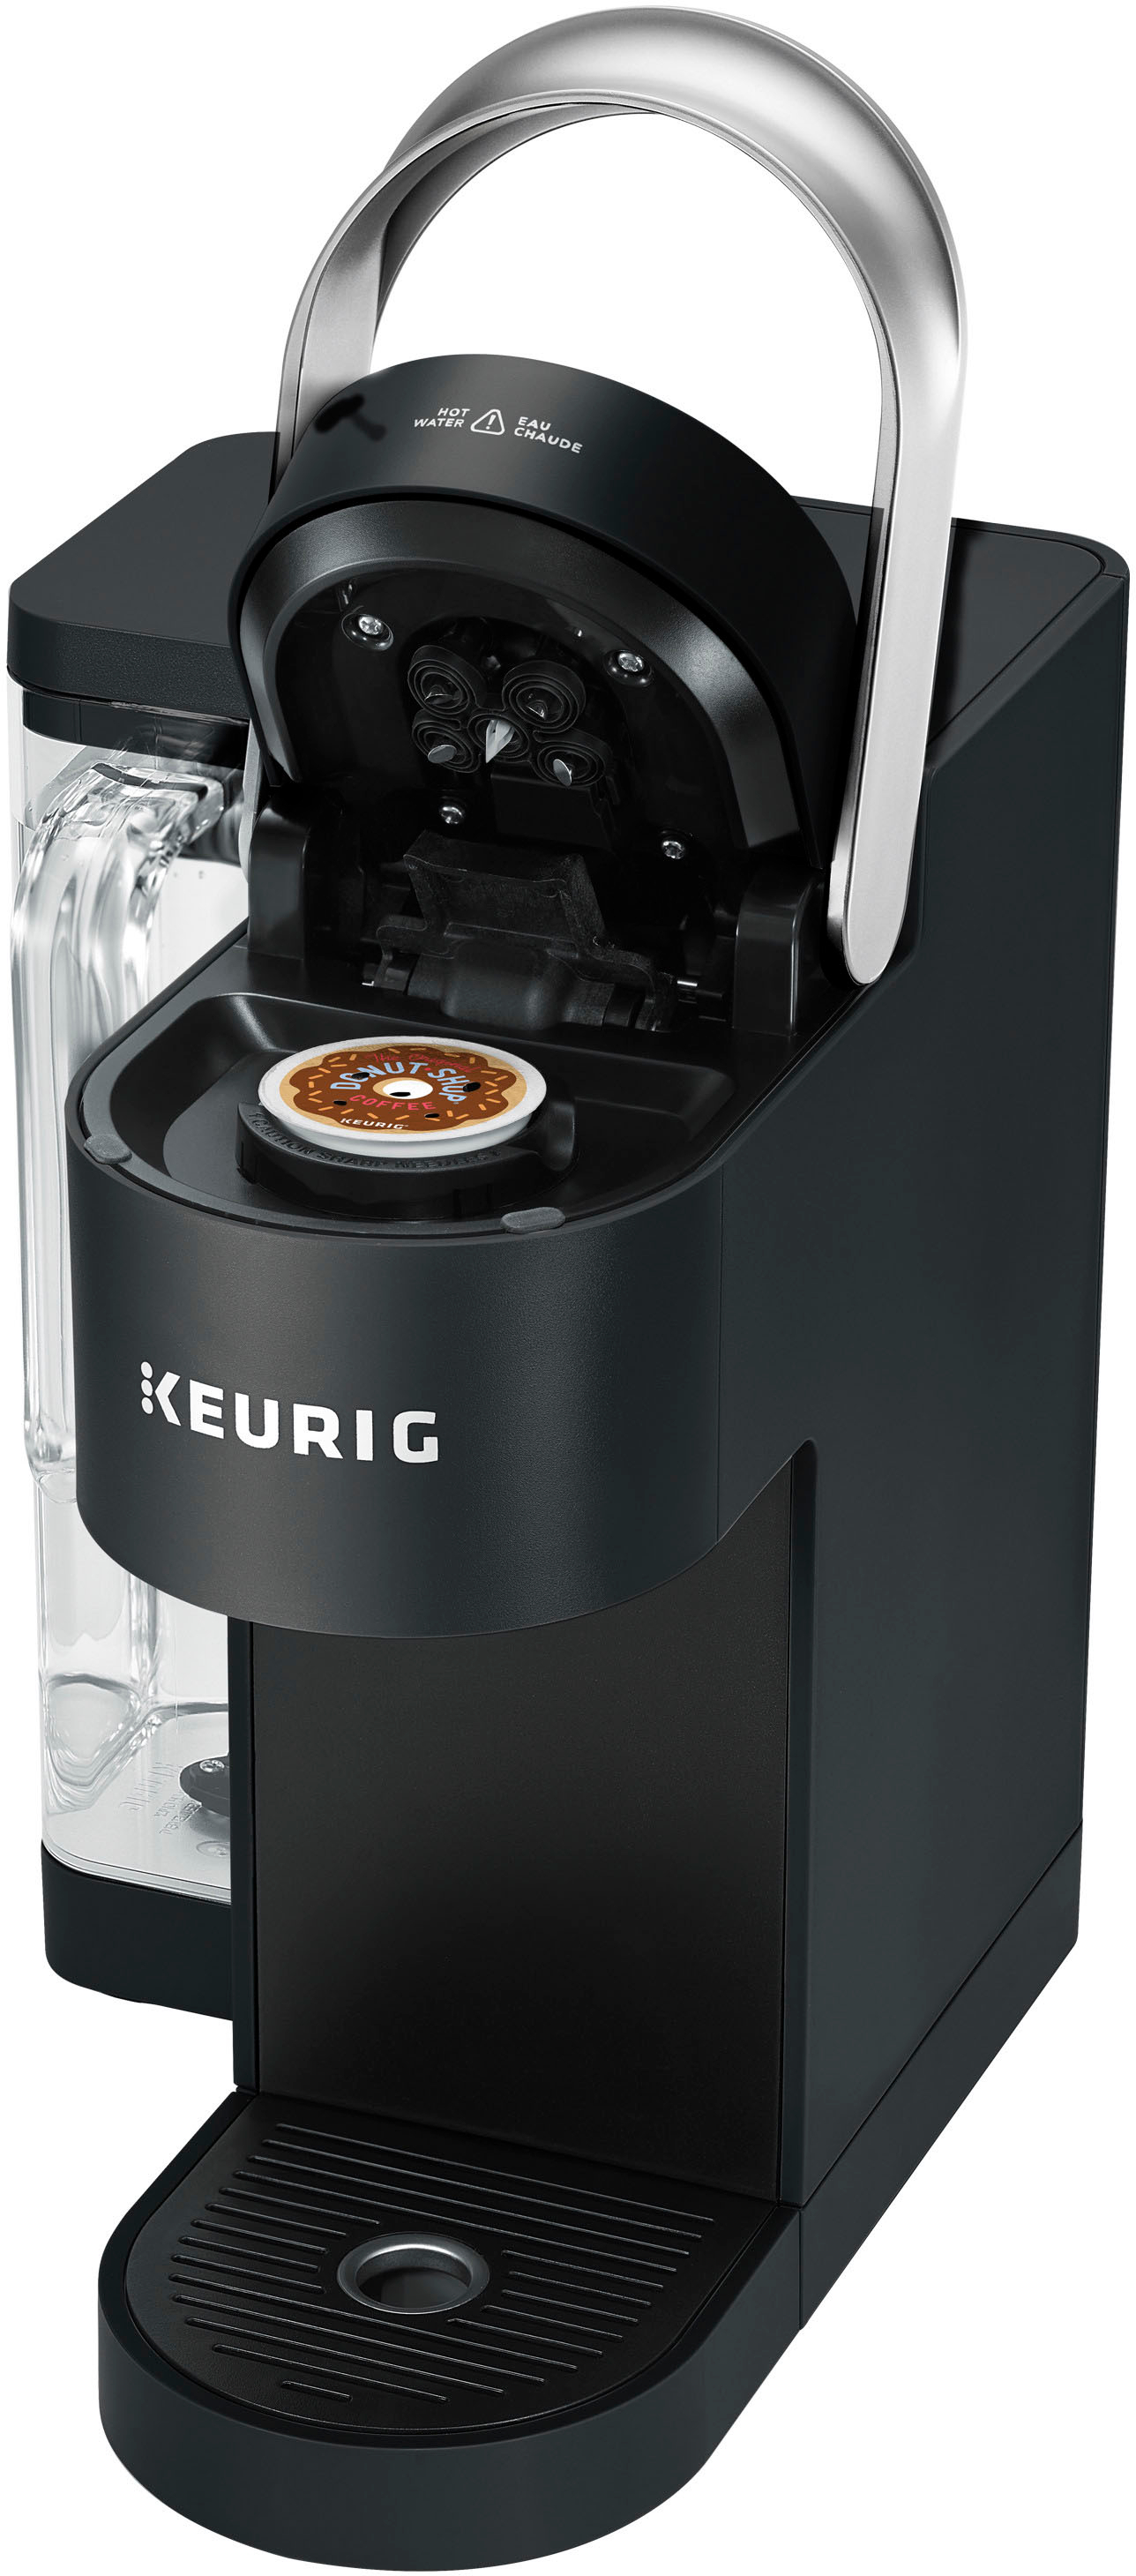 Keurig K-Supreme Smart Single Serve Coffee Maker - White